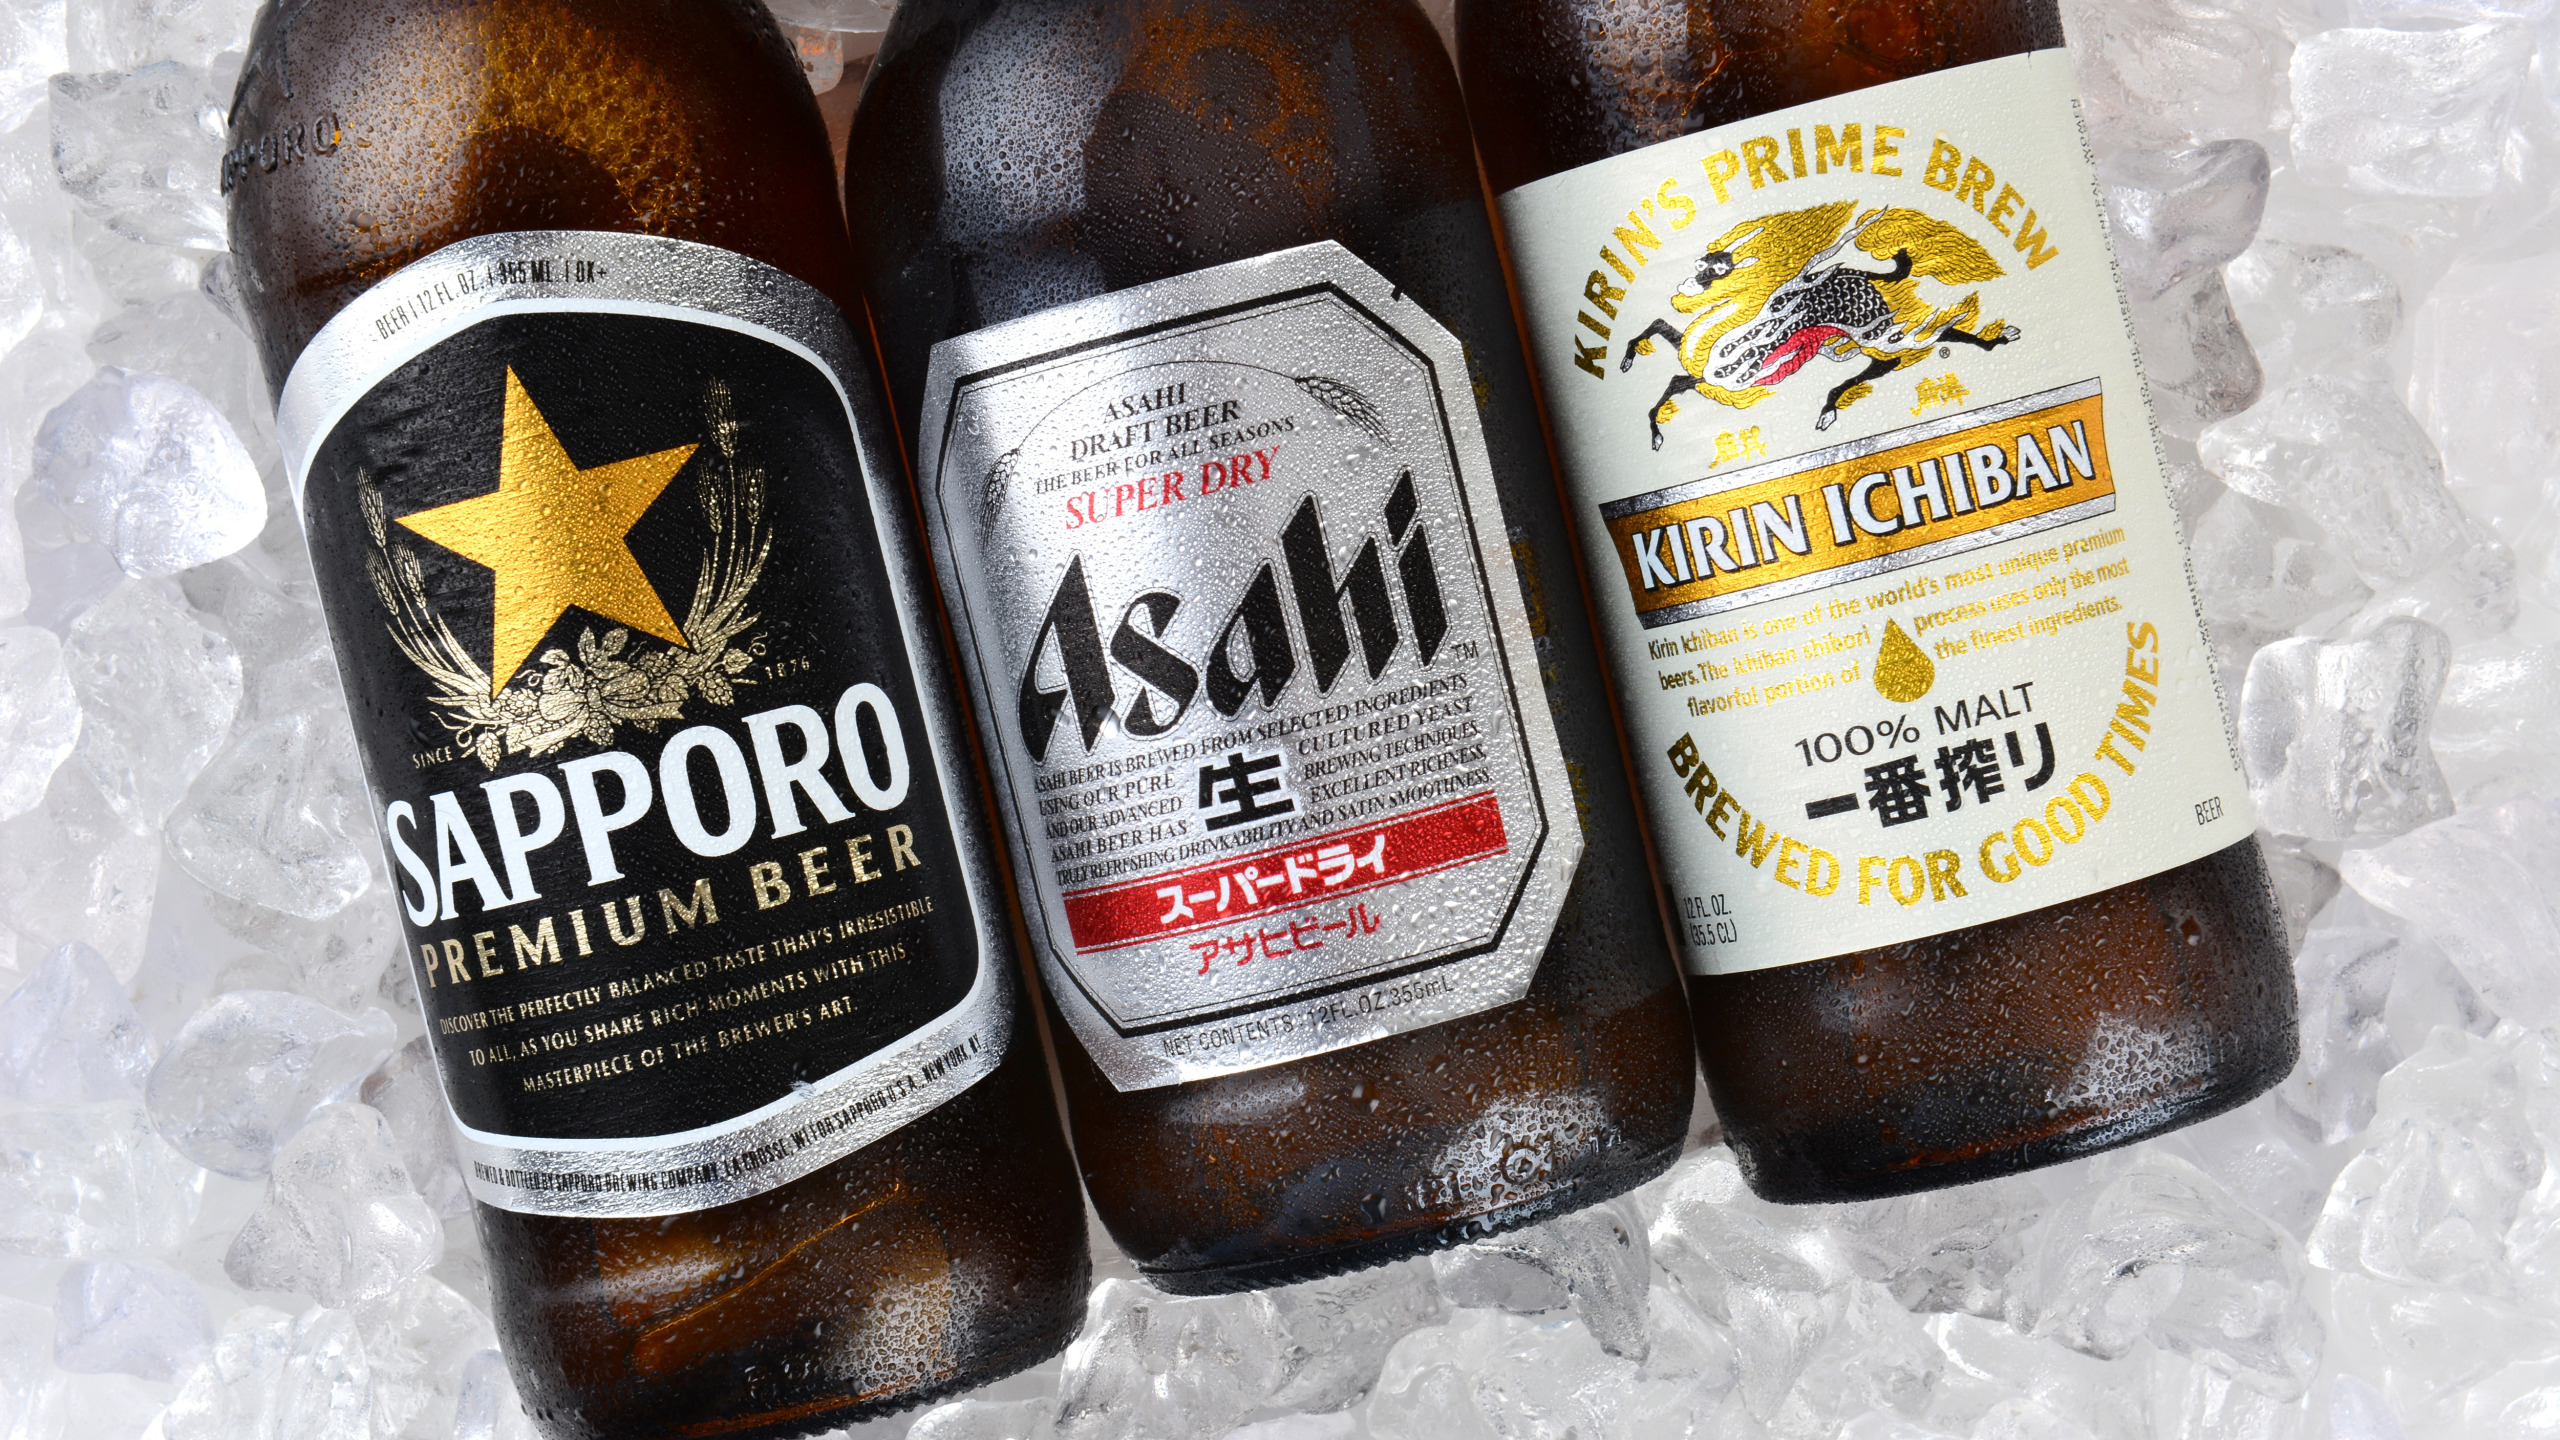 Айс бир. Айс бир пиво. Пиво с рисом бренды. Айс бир куртки. Kirin Ichiban.